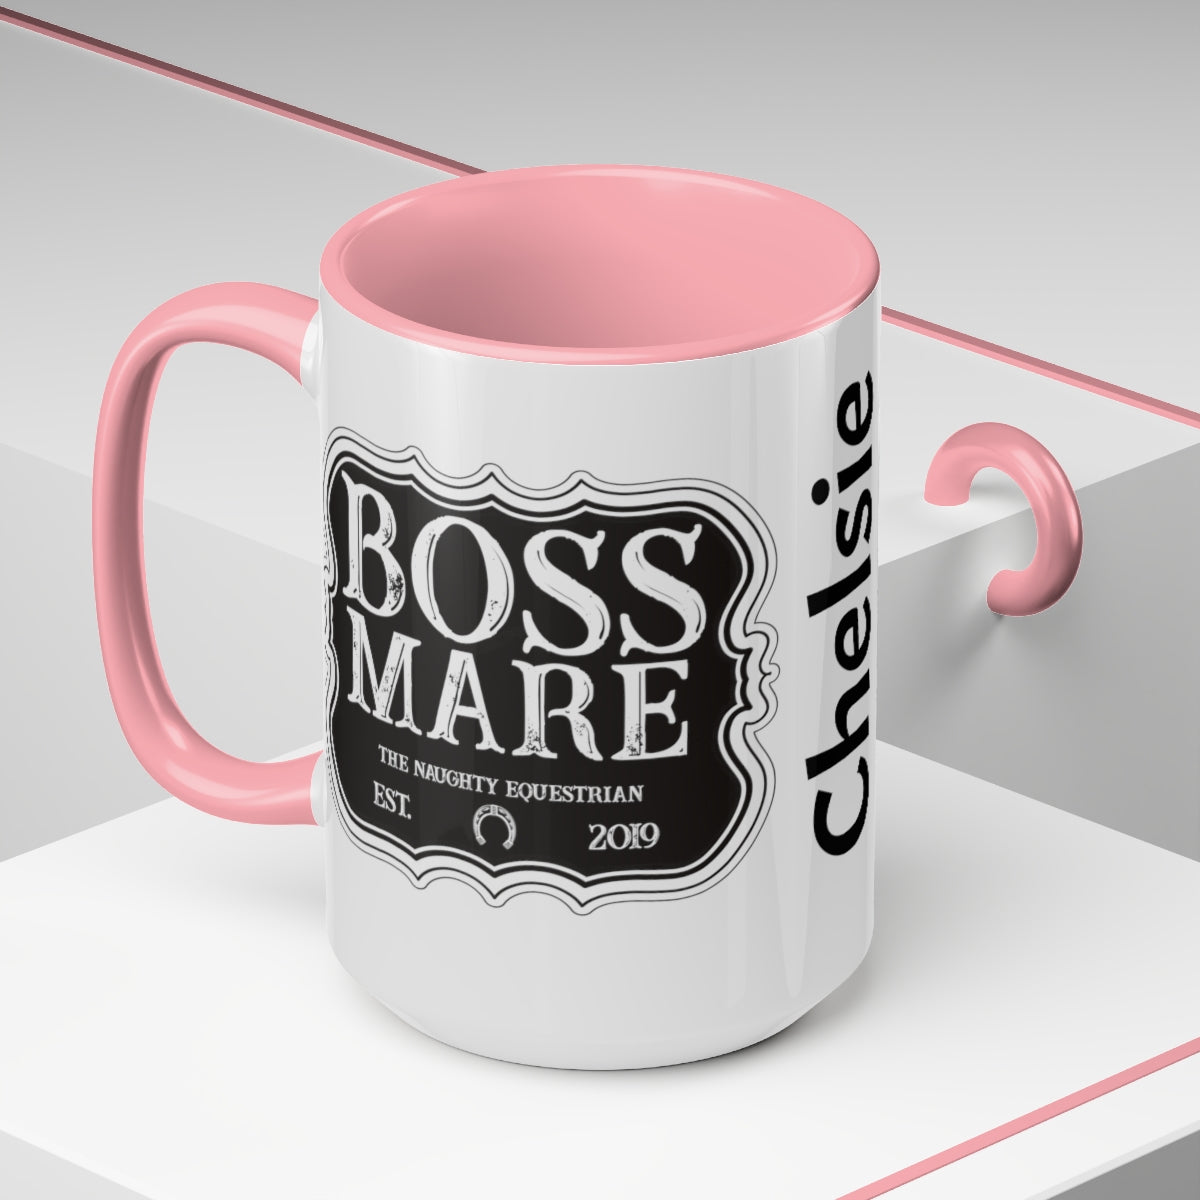 Custom Horse Mug, Boss Mare Mug - The Naughty Equestrian